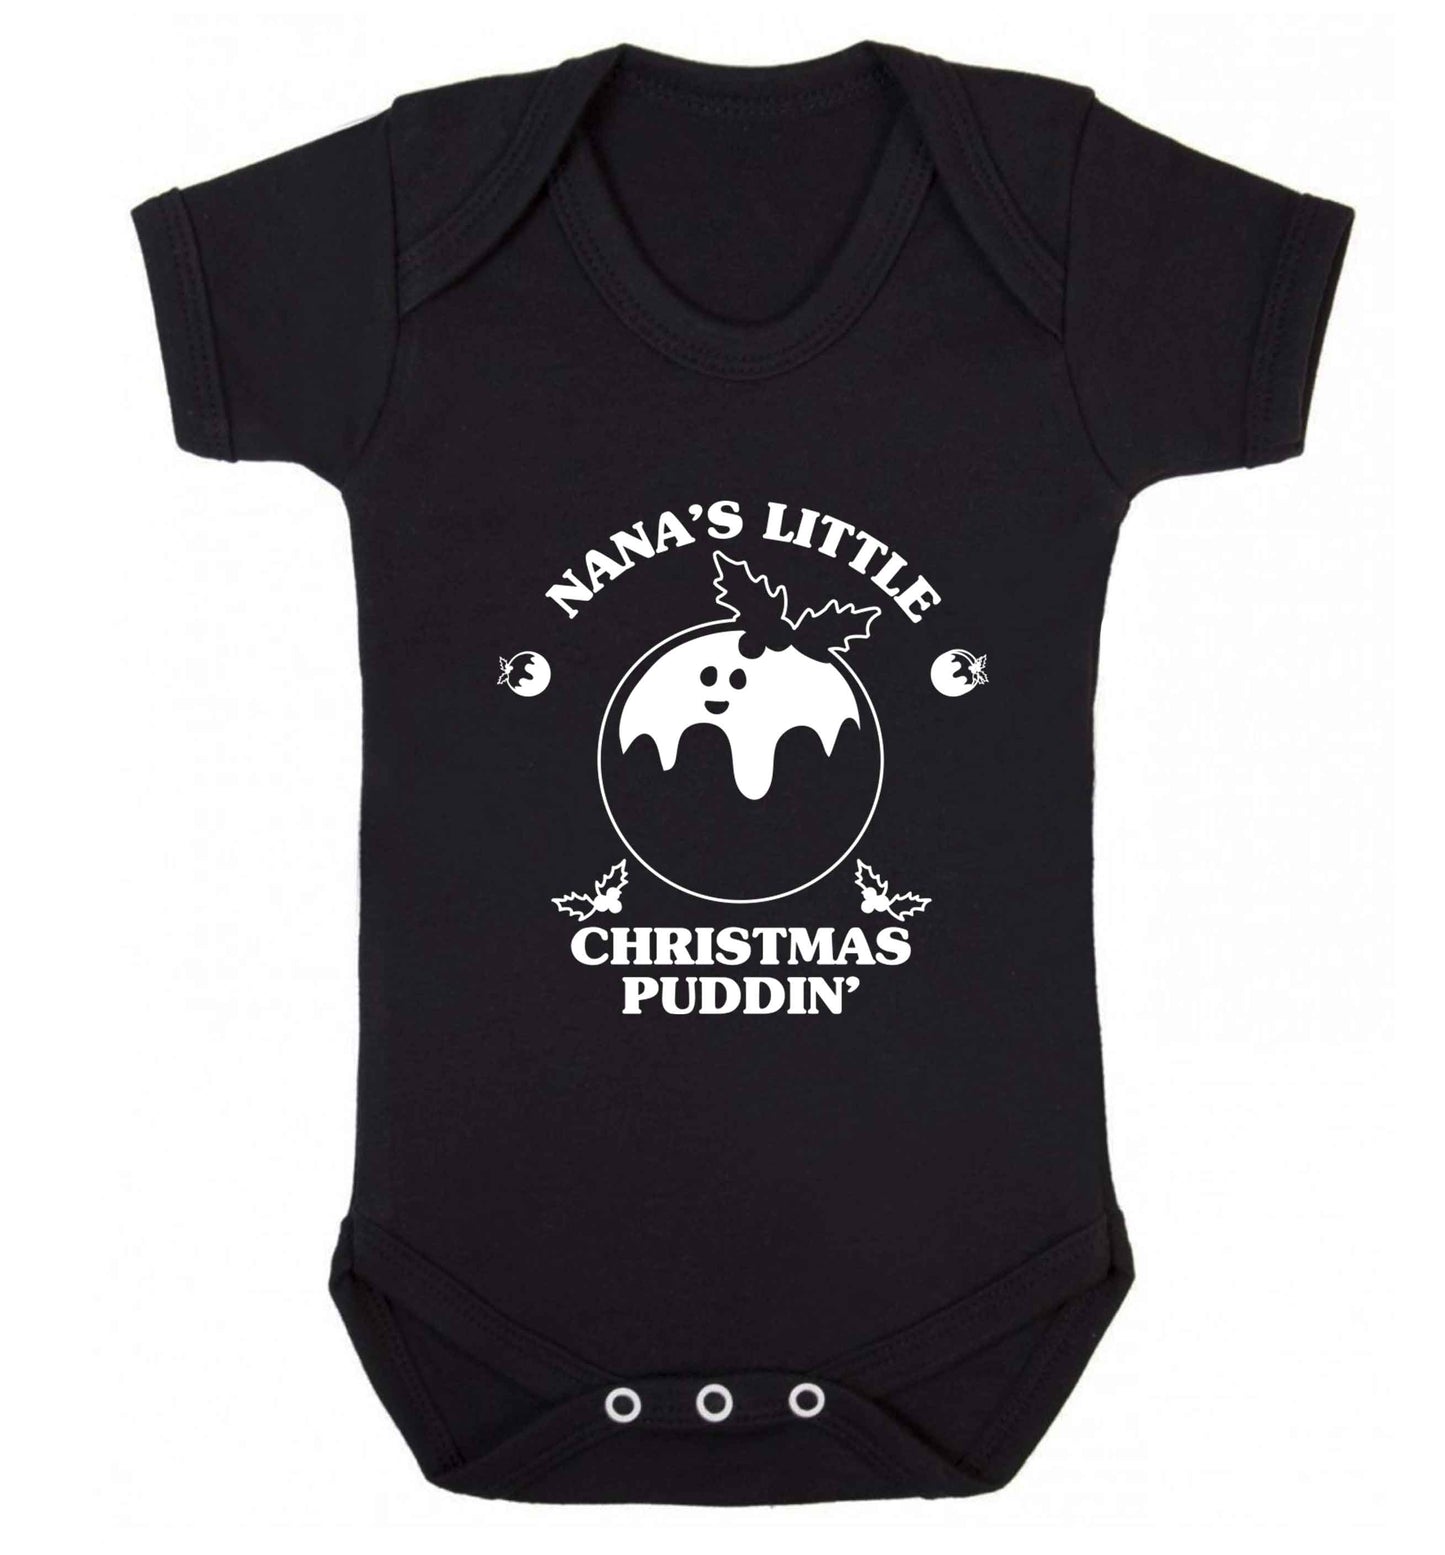 Nana's little Christmas puddin' Baby Vest black 18-24 months